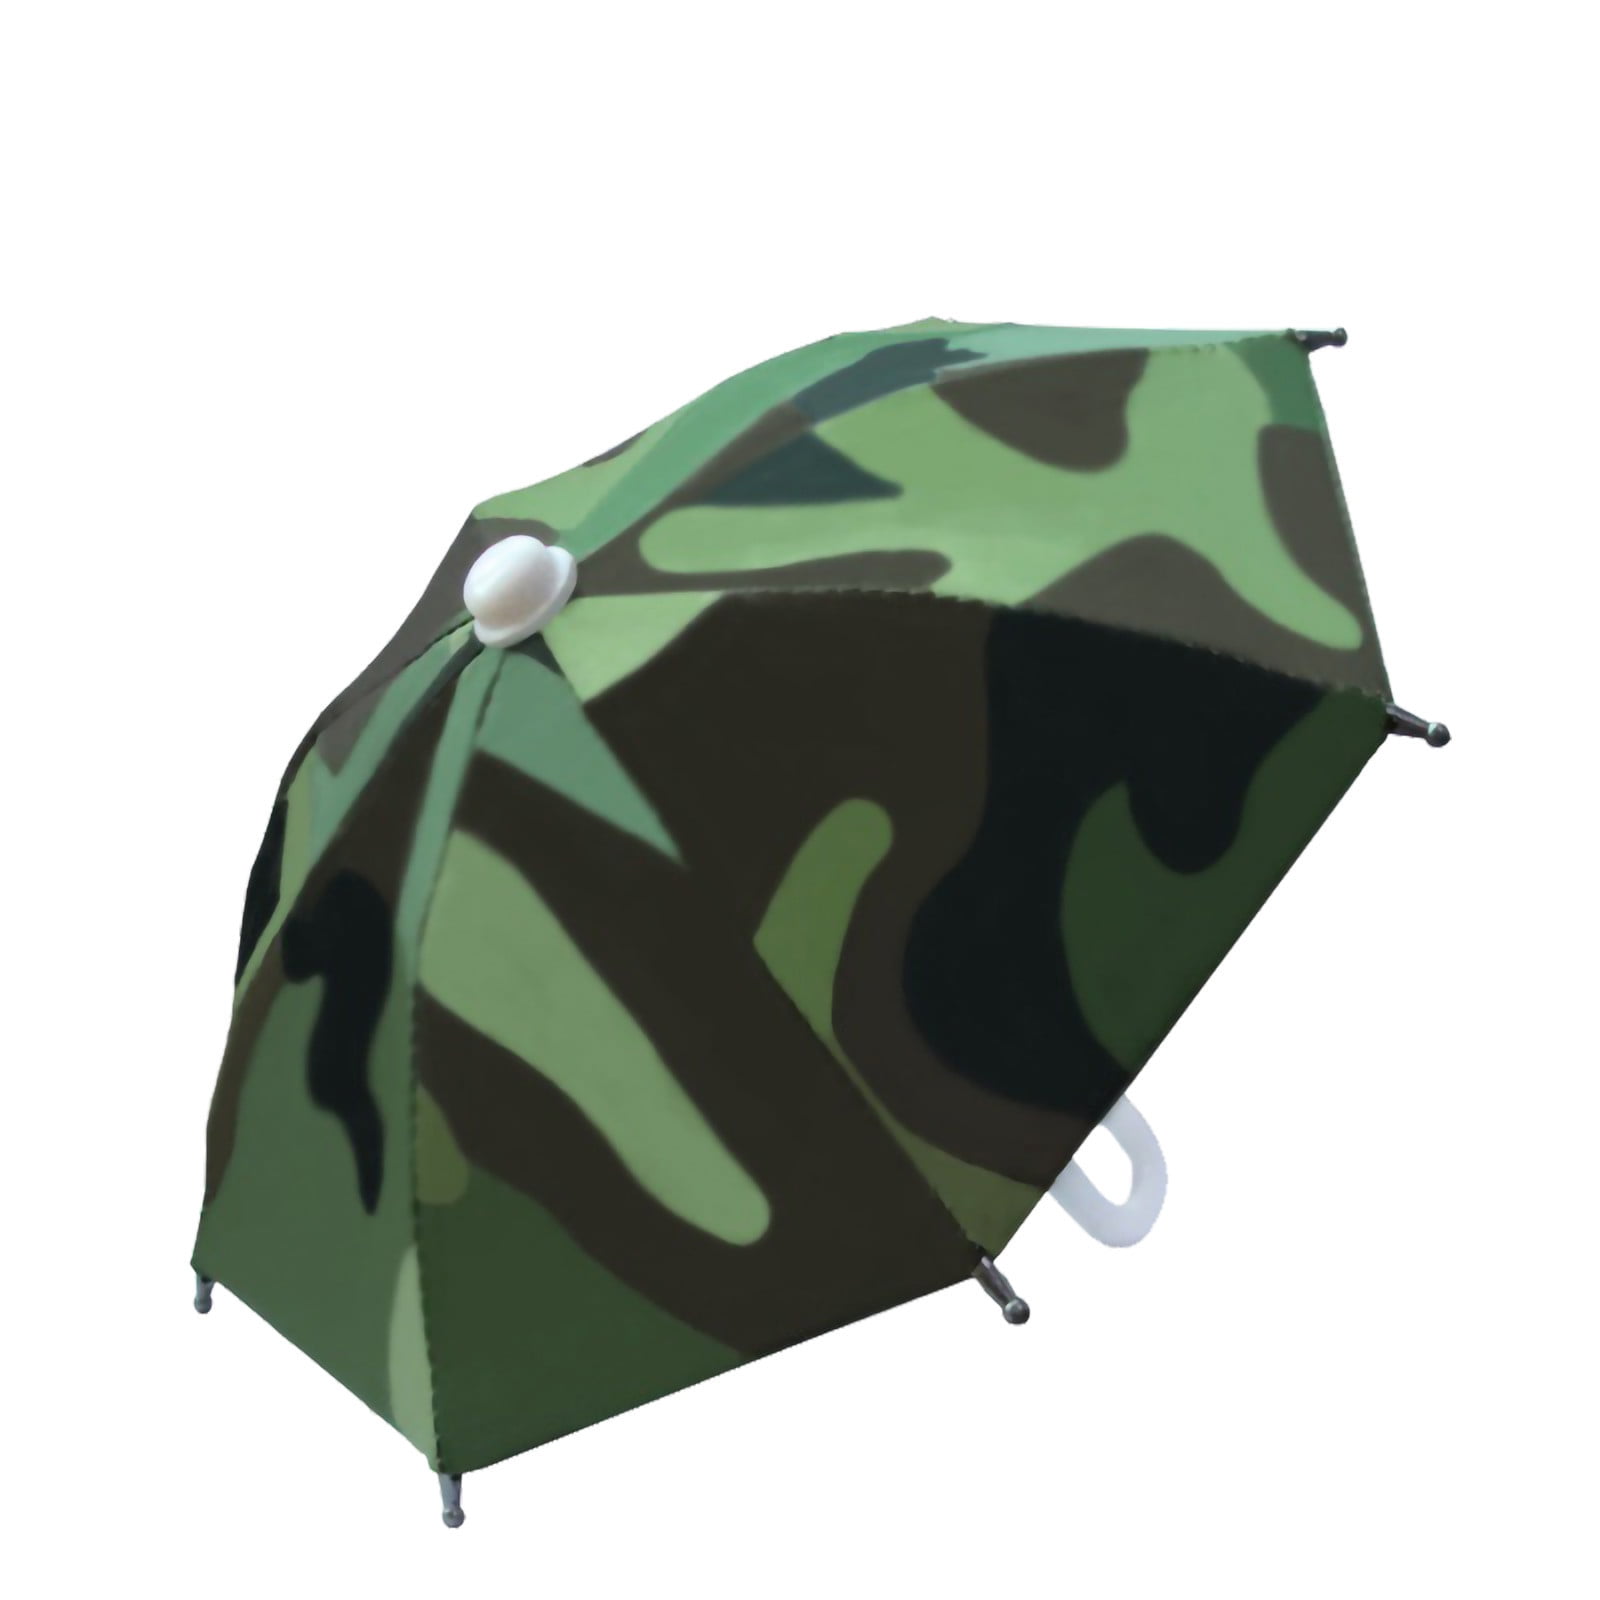 50” Arc Camouflage Umbrella-RainStoppers Rain/Sun Windproof Camo Hunting Camping 